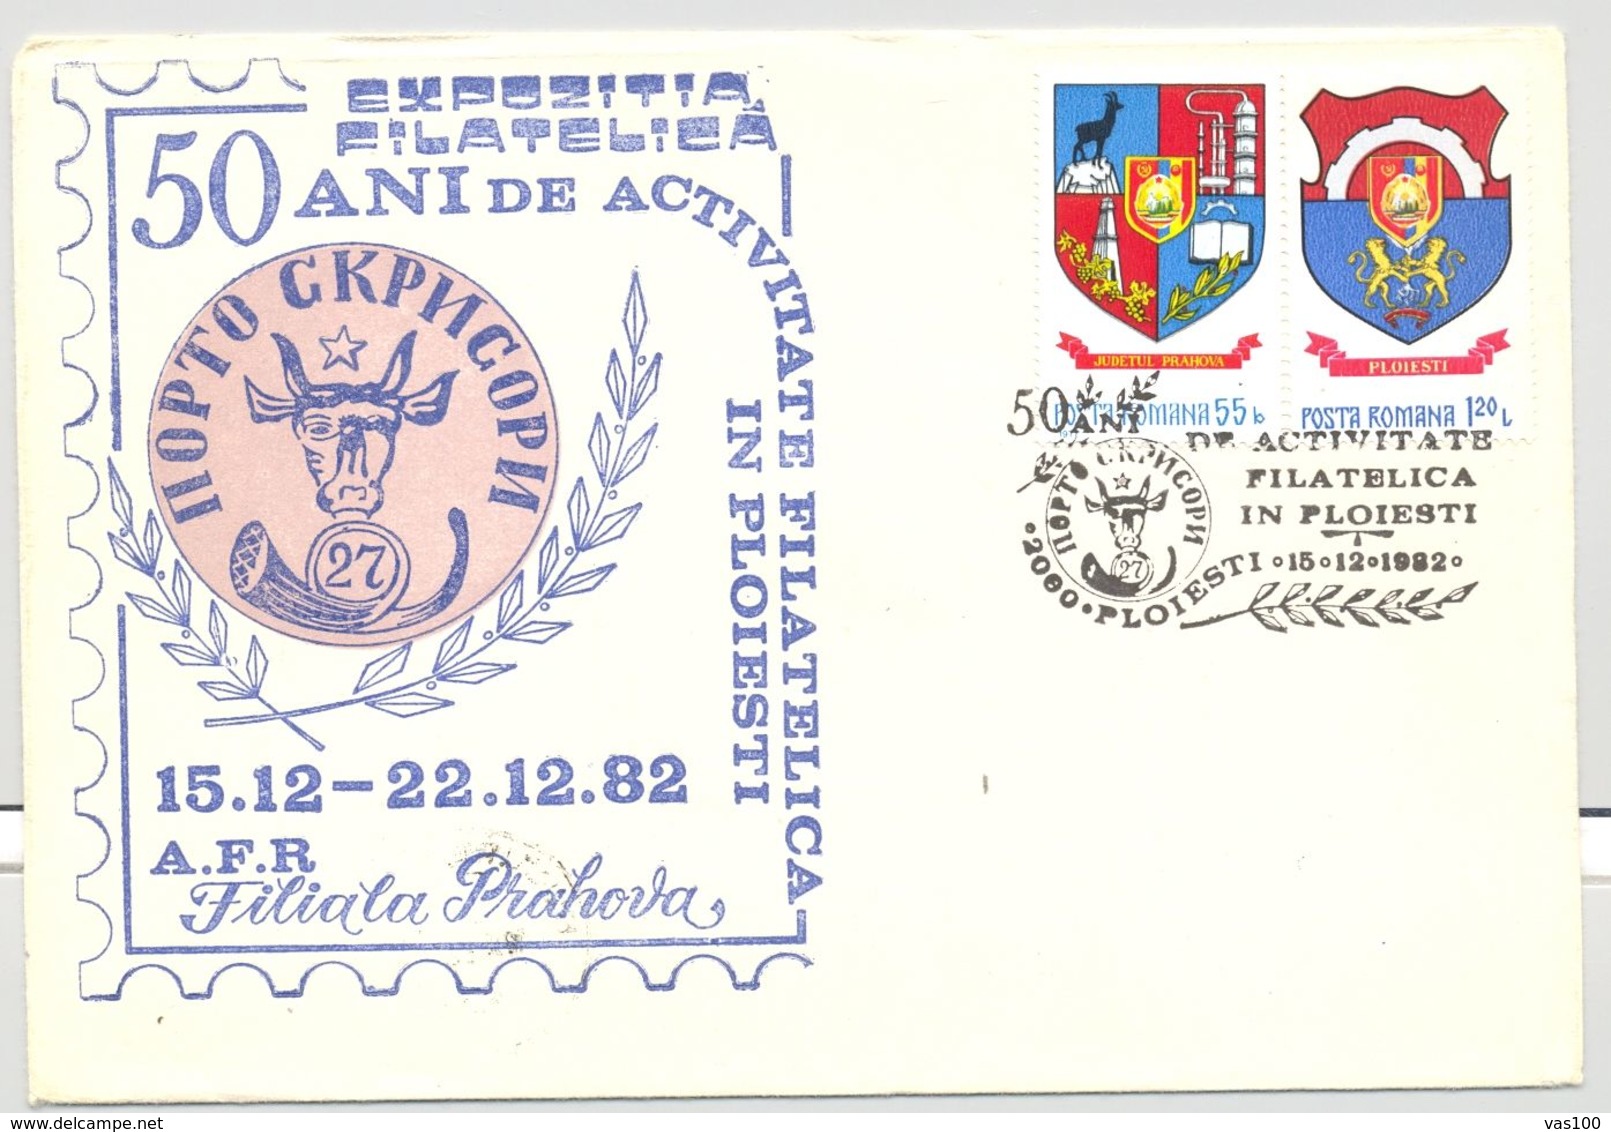 PLOIESTI PHILATELIC CLUB ANNIVERSARY, COAT OF ARMS STAMPS, SPECIAL COVER, 1982, ROMANIA - Storia Postale